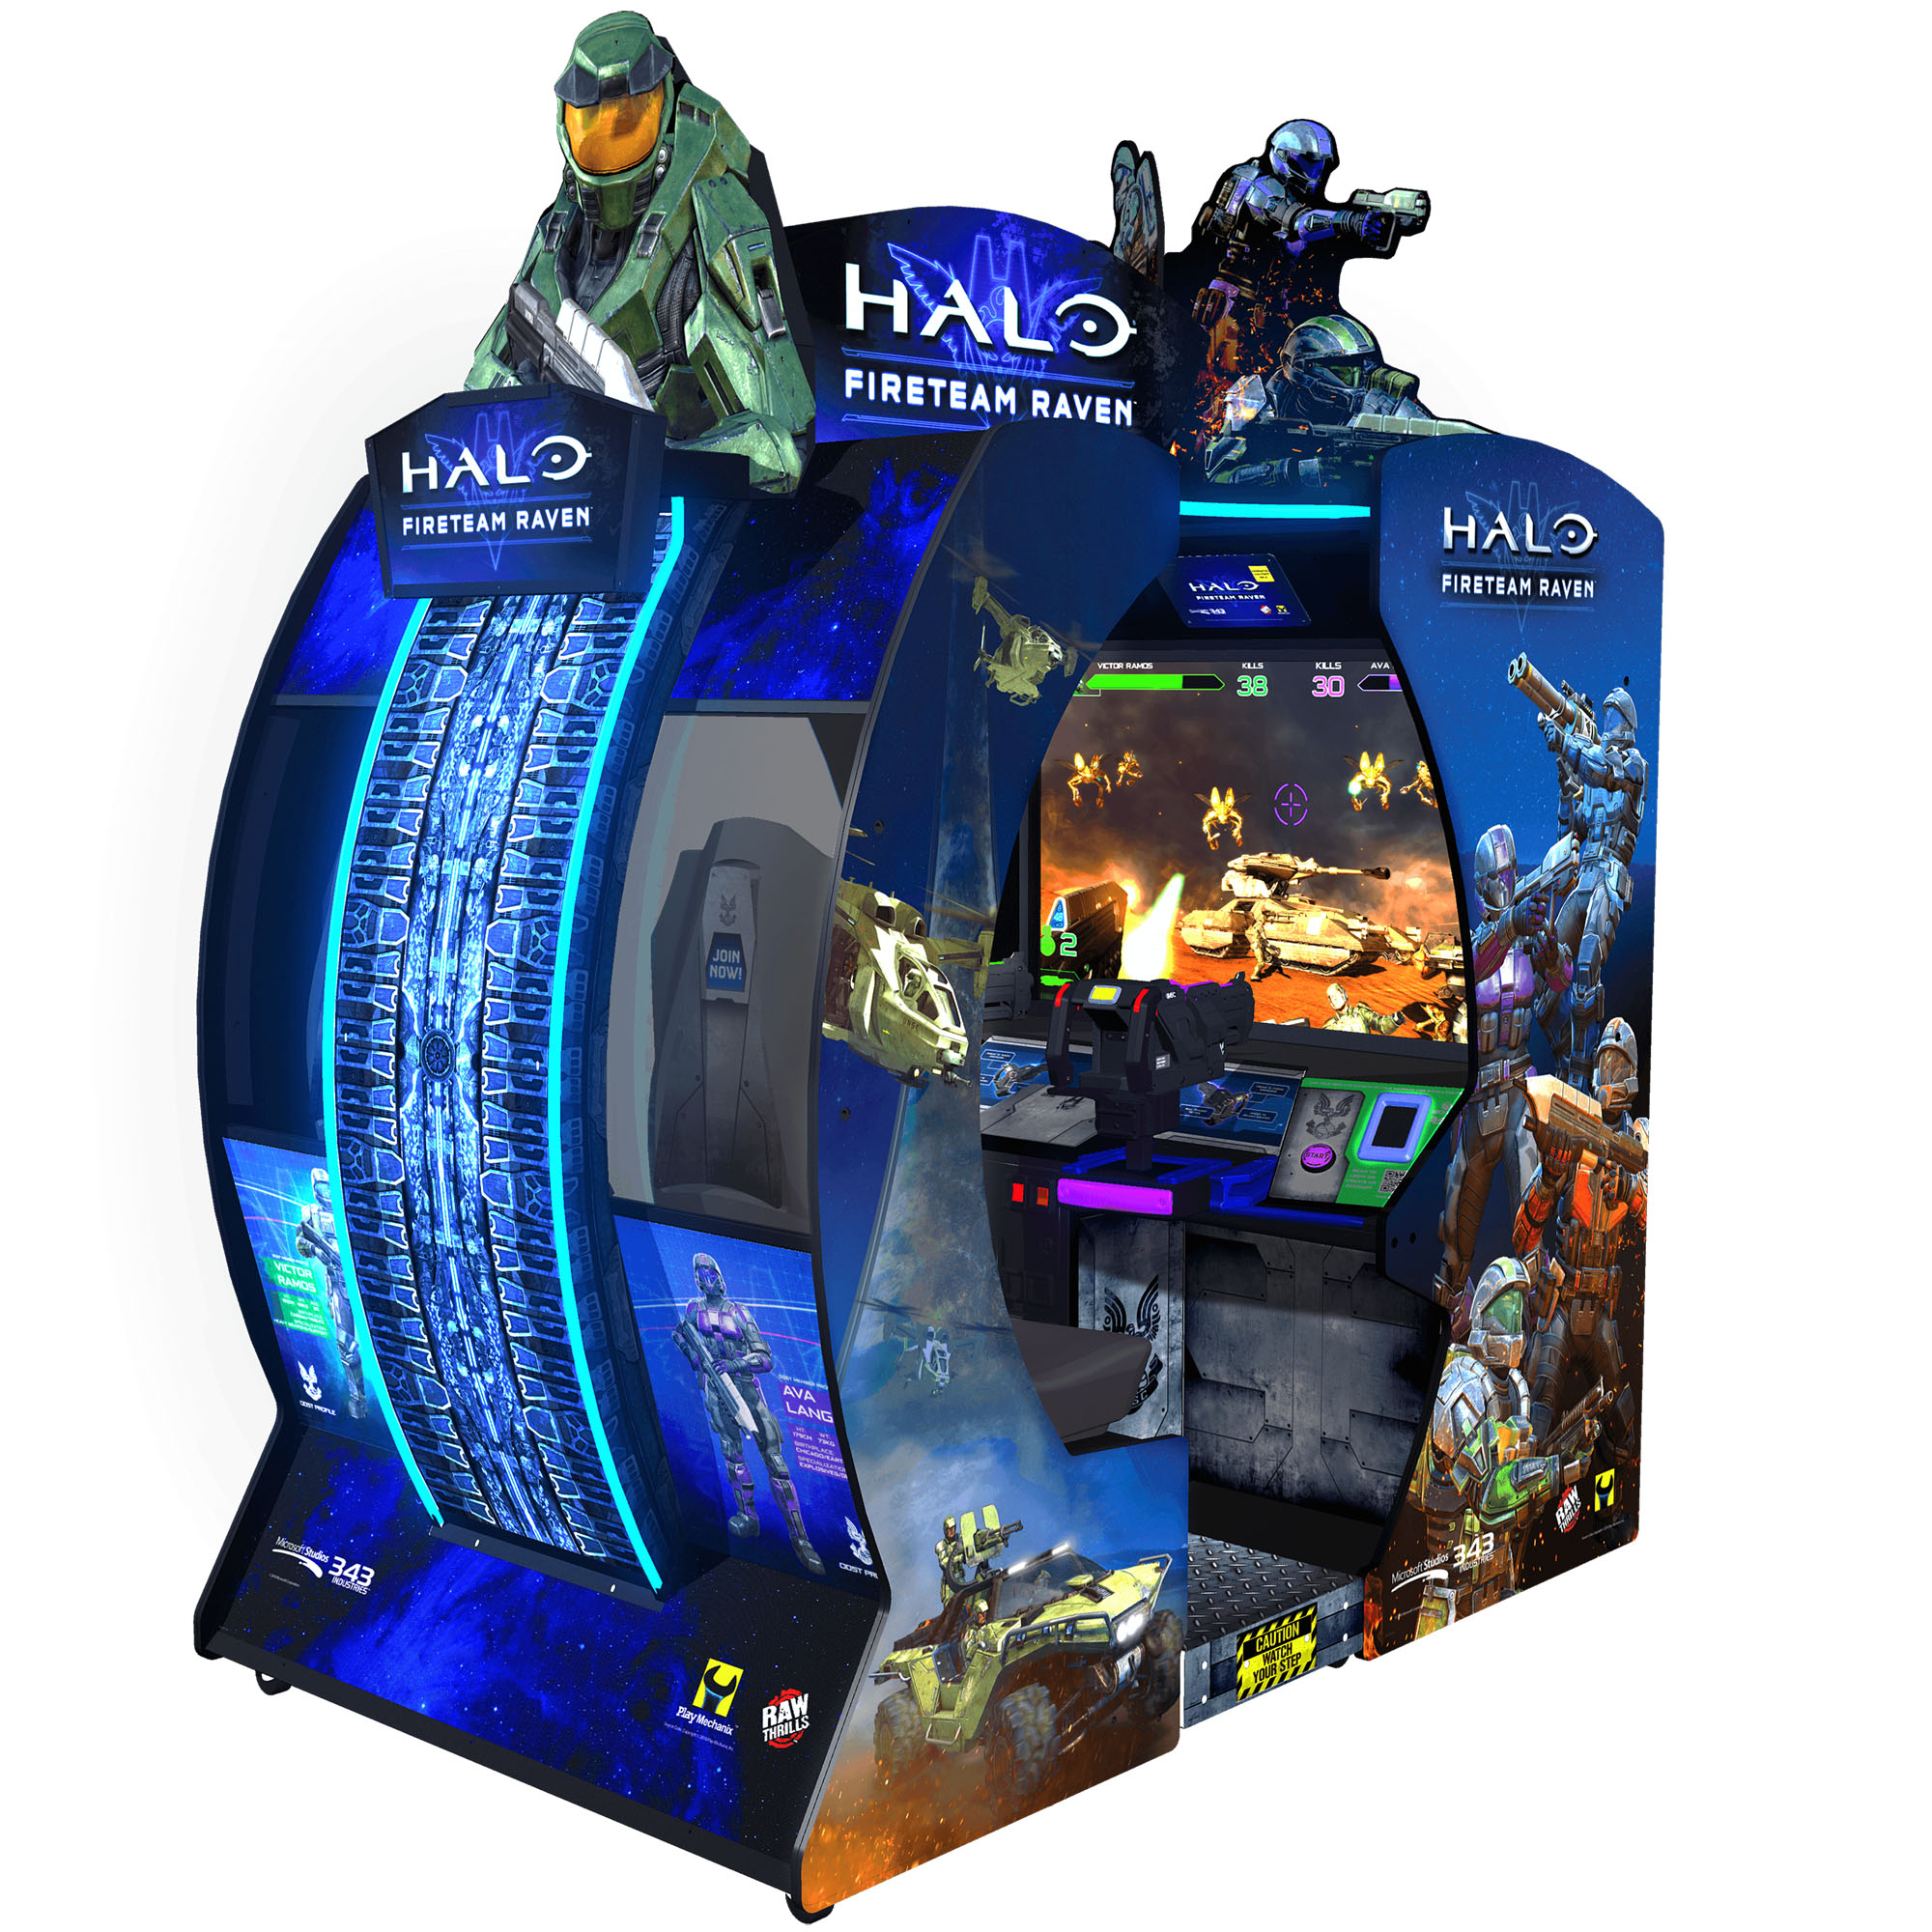 Halo: Fireteam Raven 55" DX, 2 Player